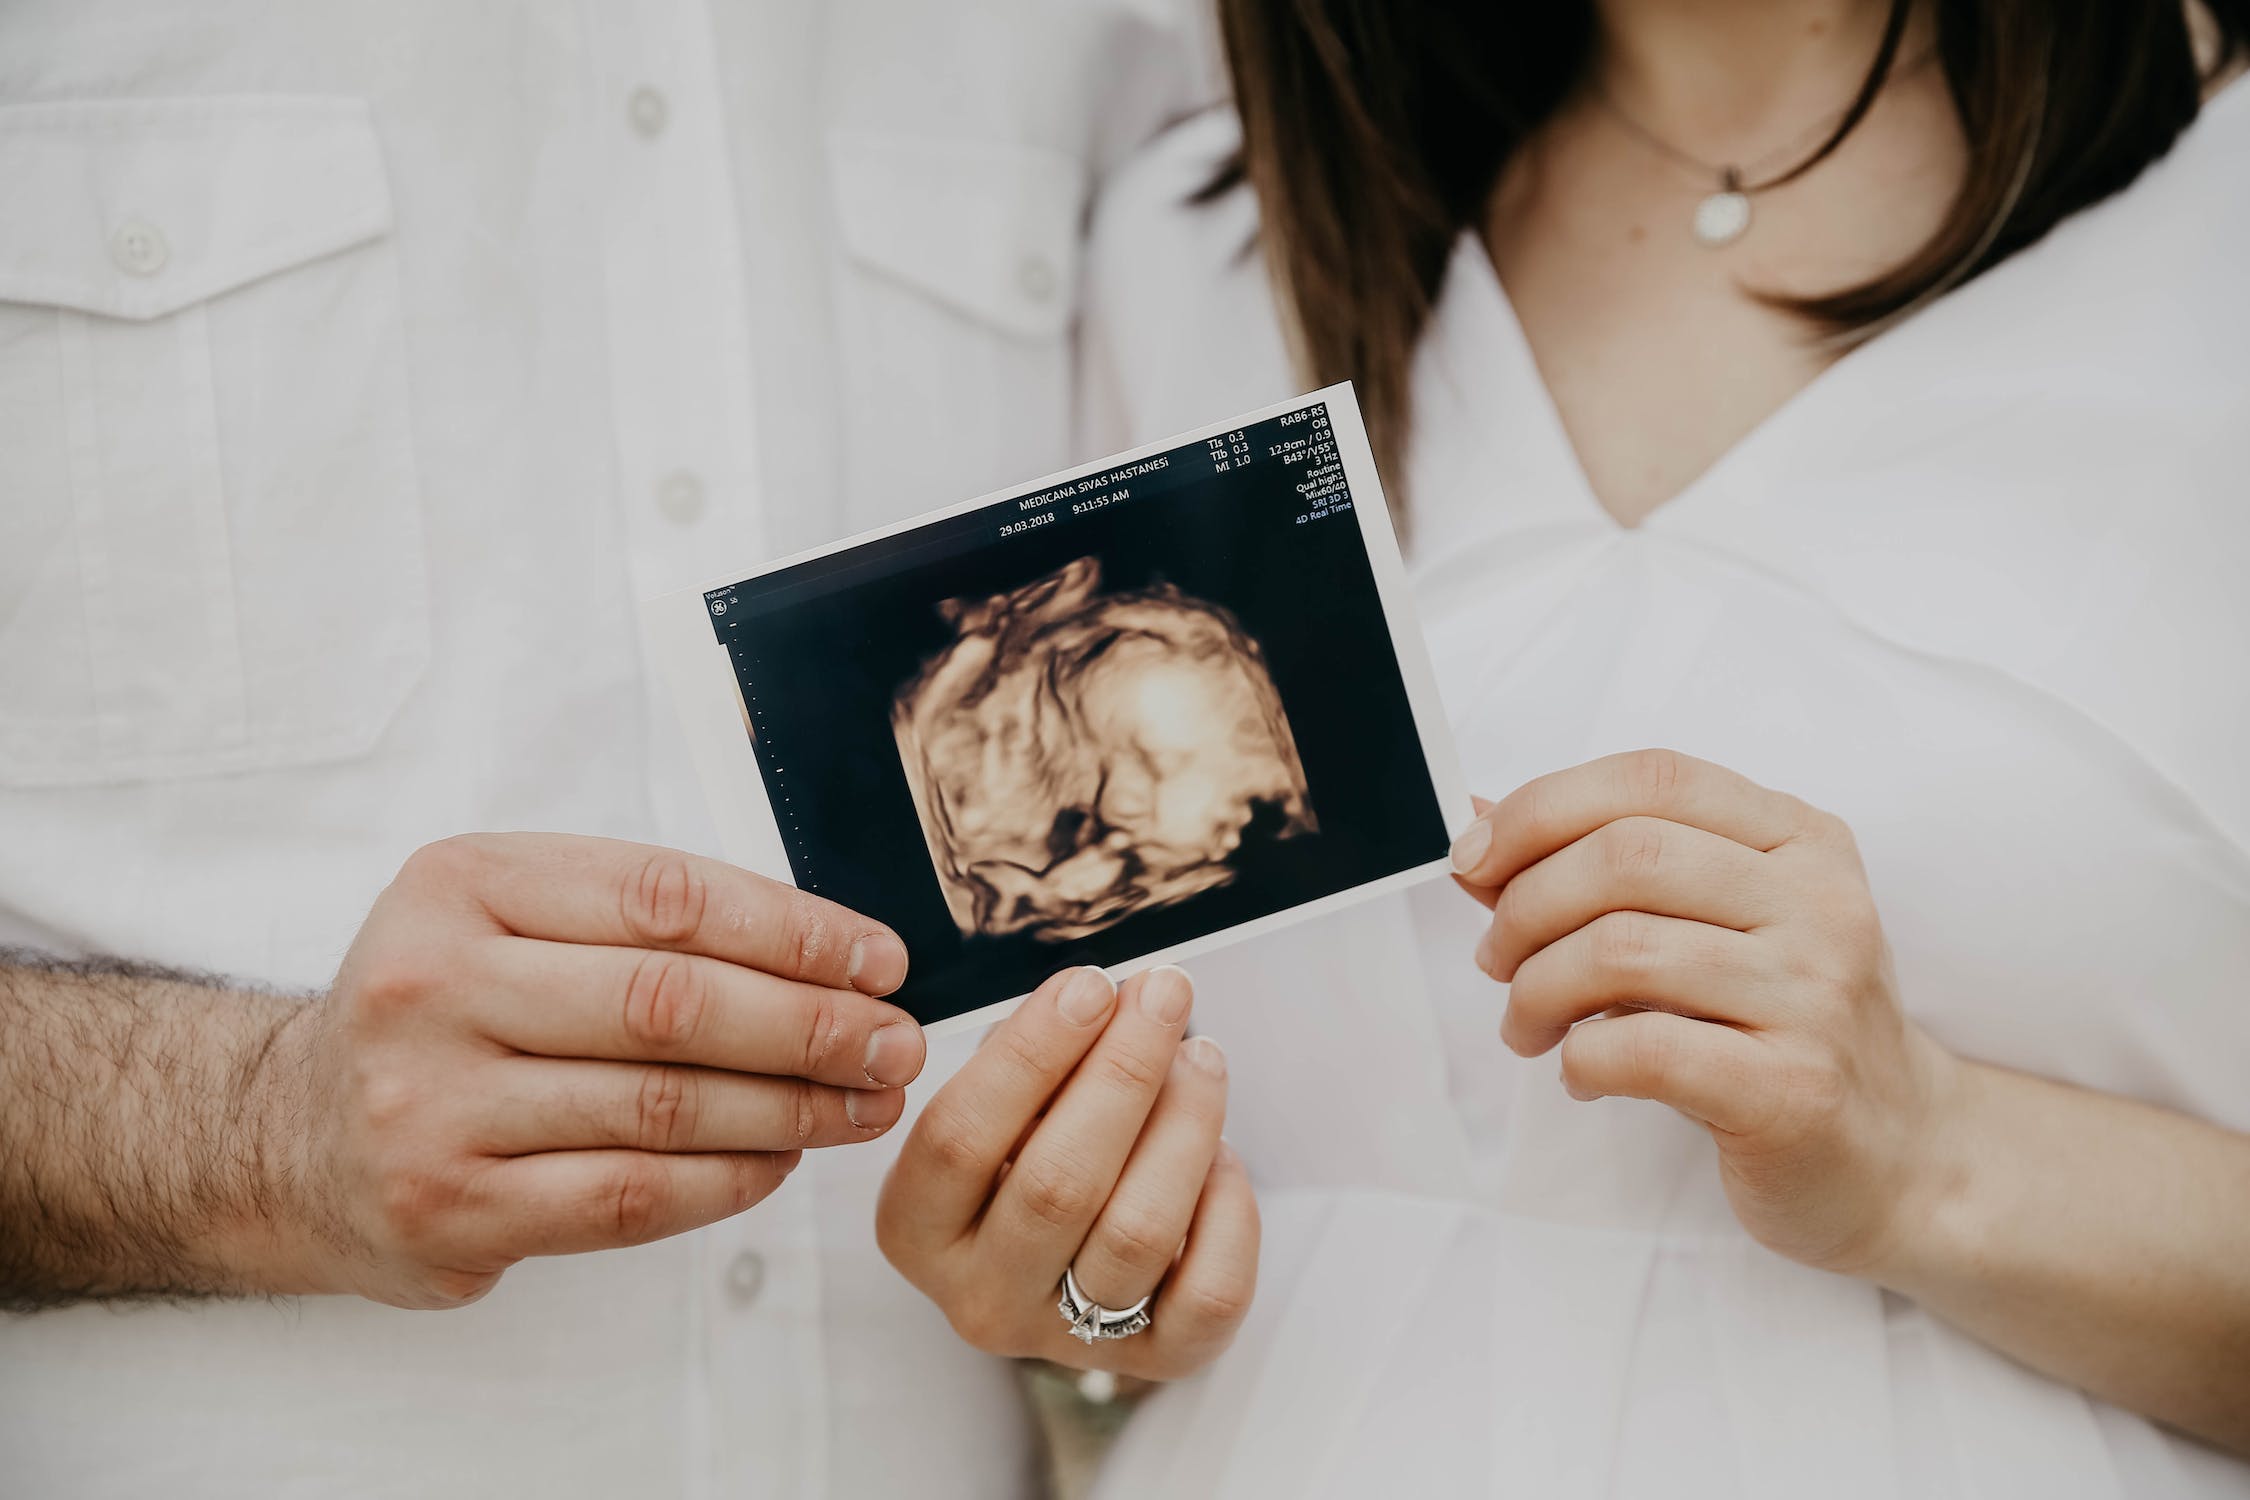 An ultrasound photo | Source: Pexels